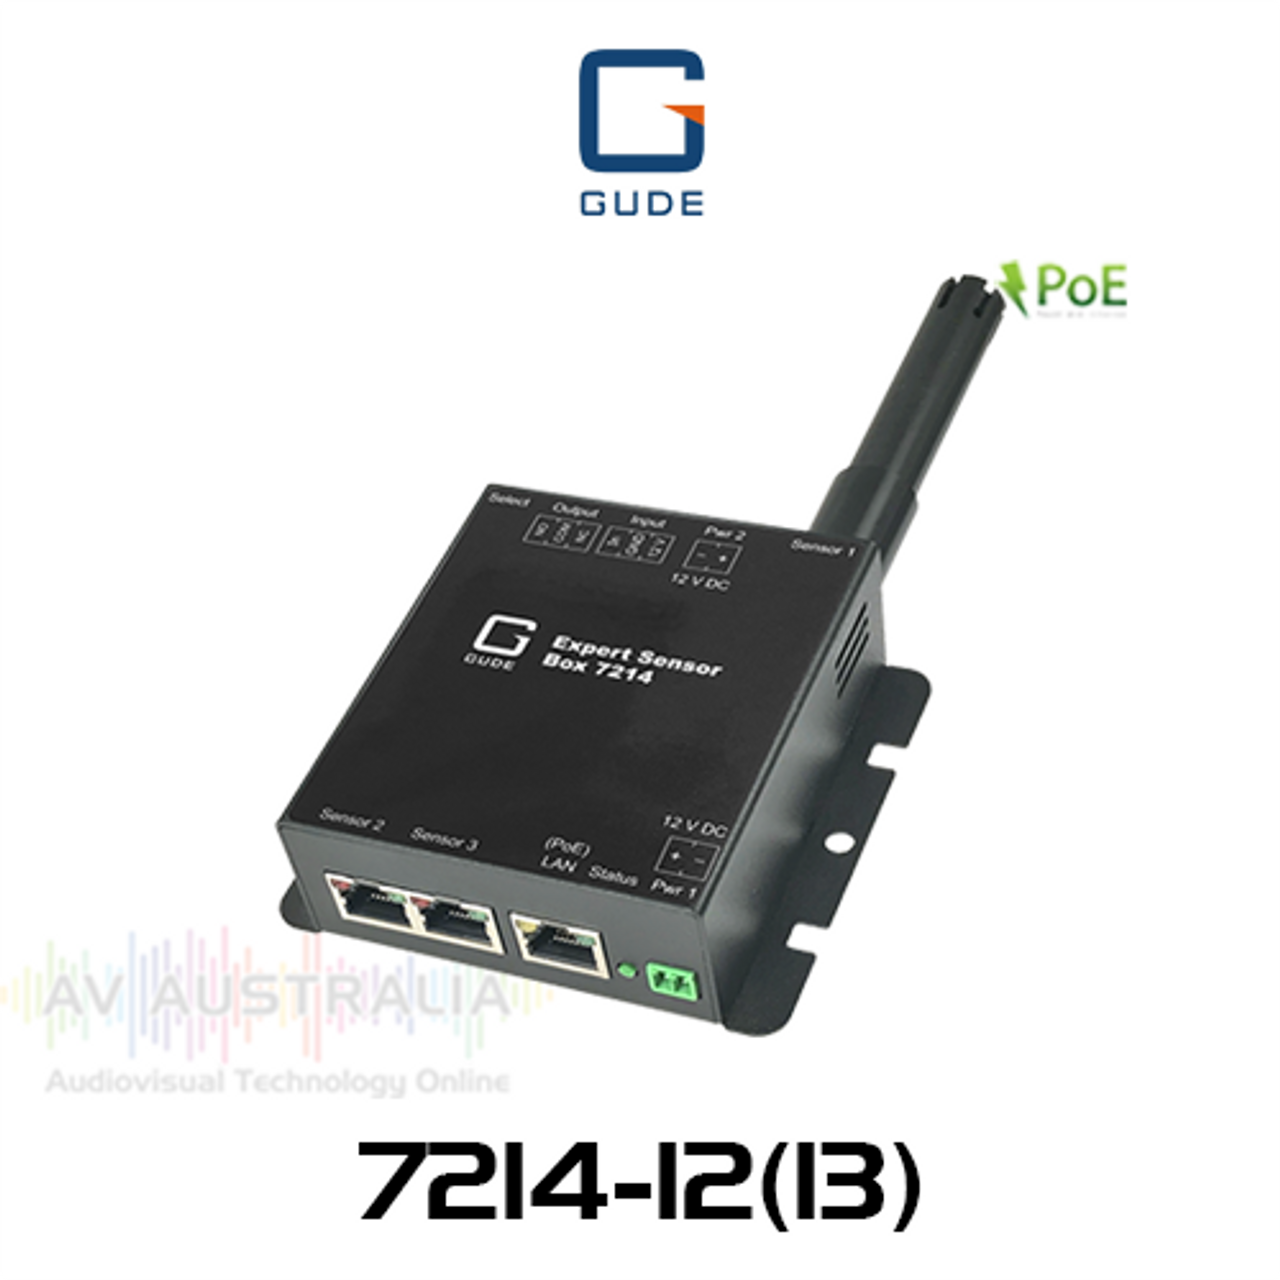 GUDE PoE LAN Sensor with I/O Monitoring (Temperature, Humidity, Air Pressure)